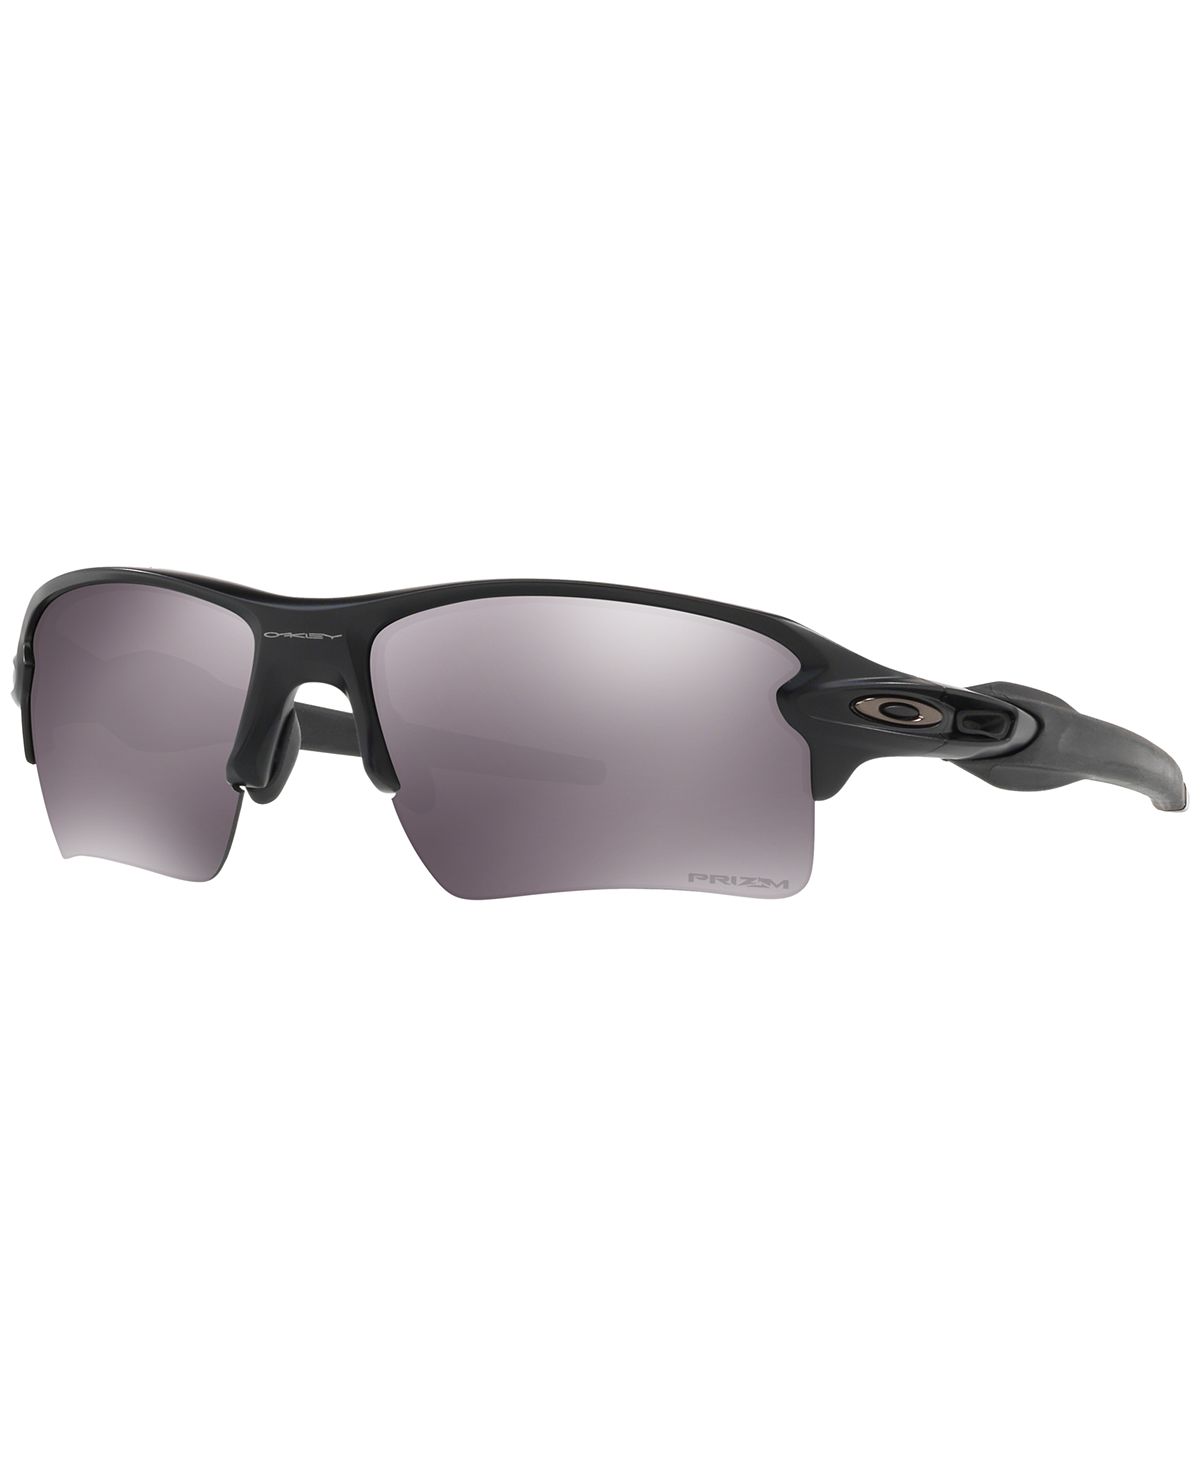 Солнцезащитные очки FLAK 2 XL OO9188 Oakley t6148 matte black 220 мл c13t614800